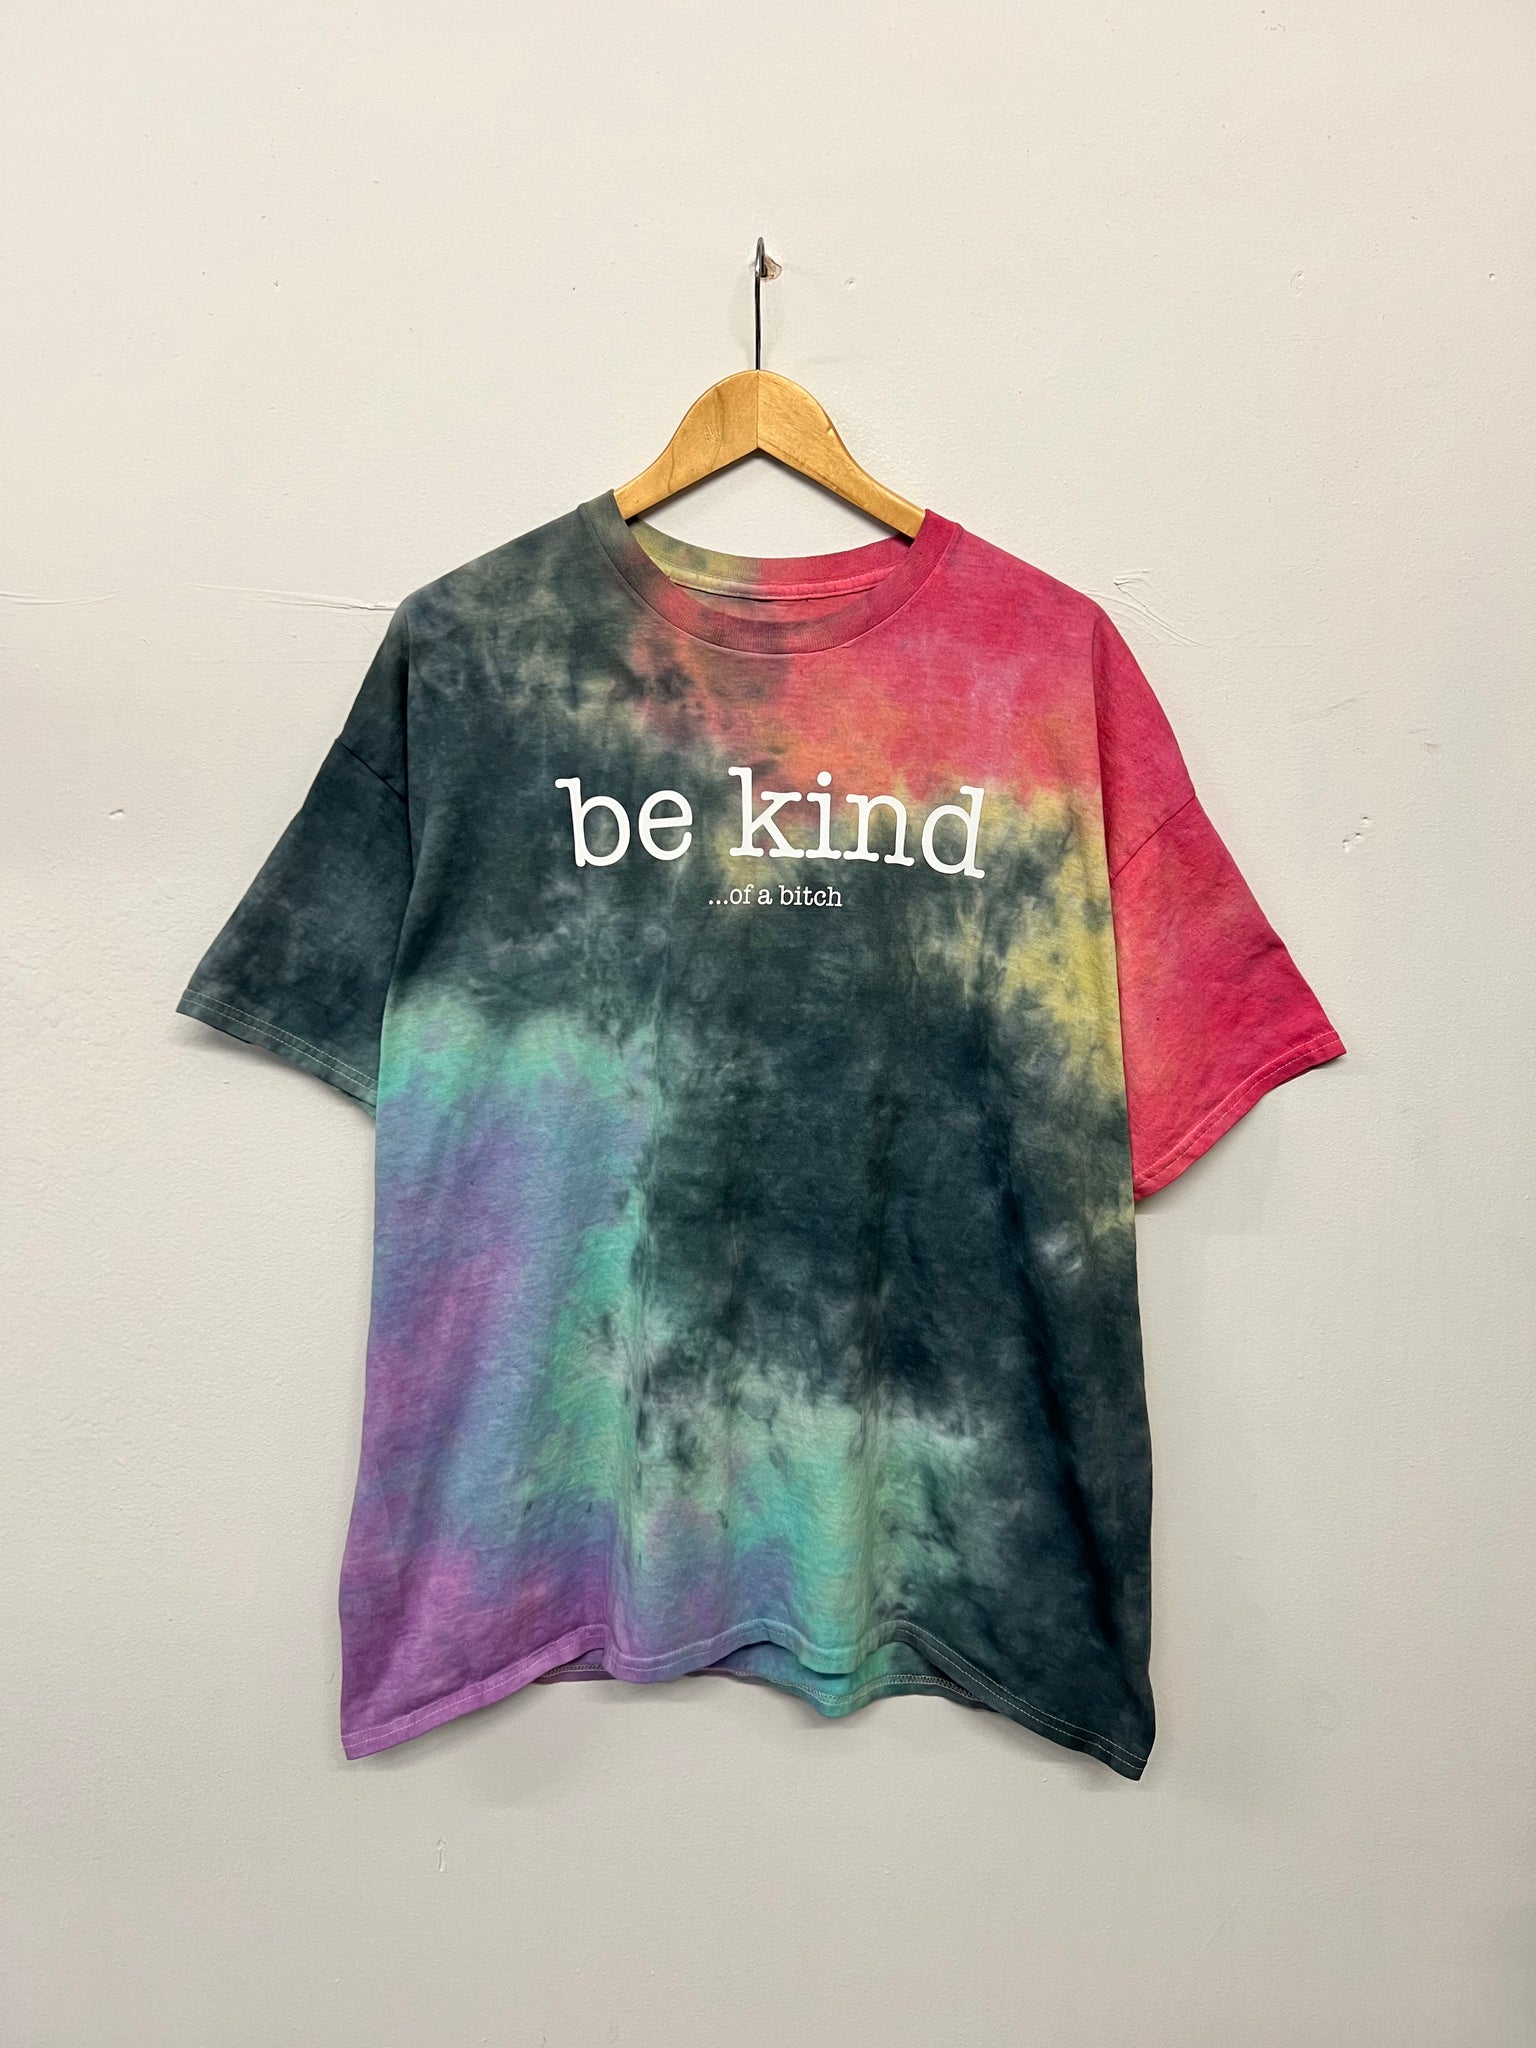 be kind...of a bitch Tie Dye